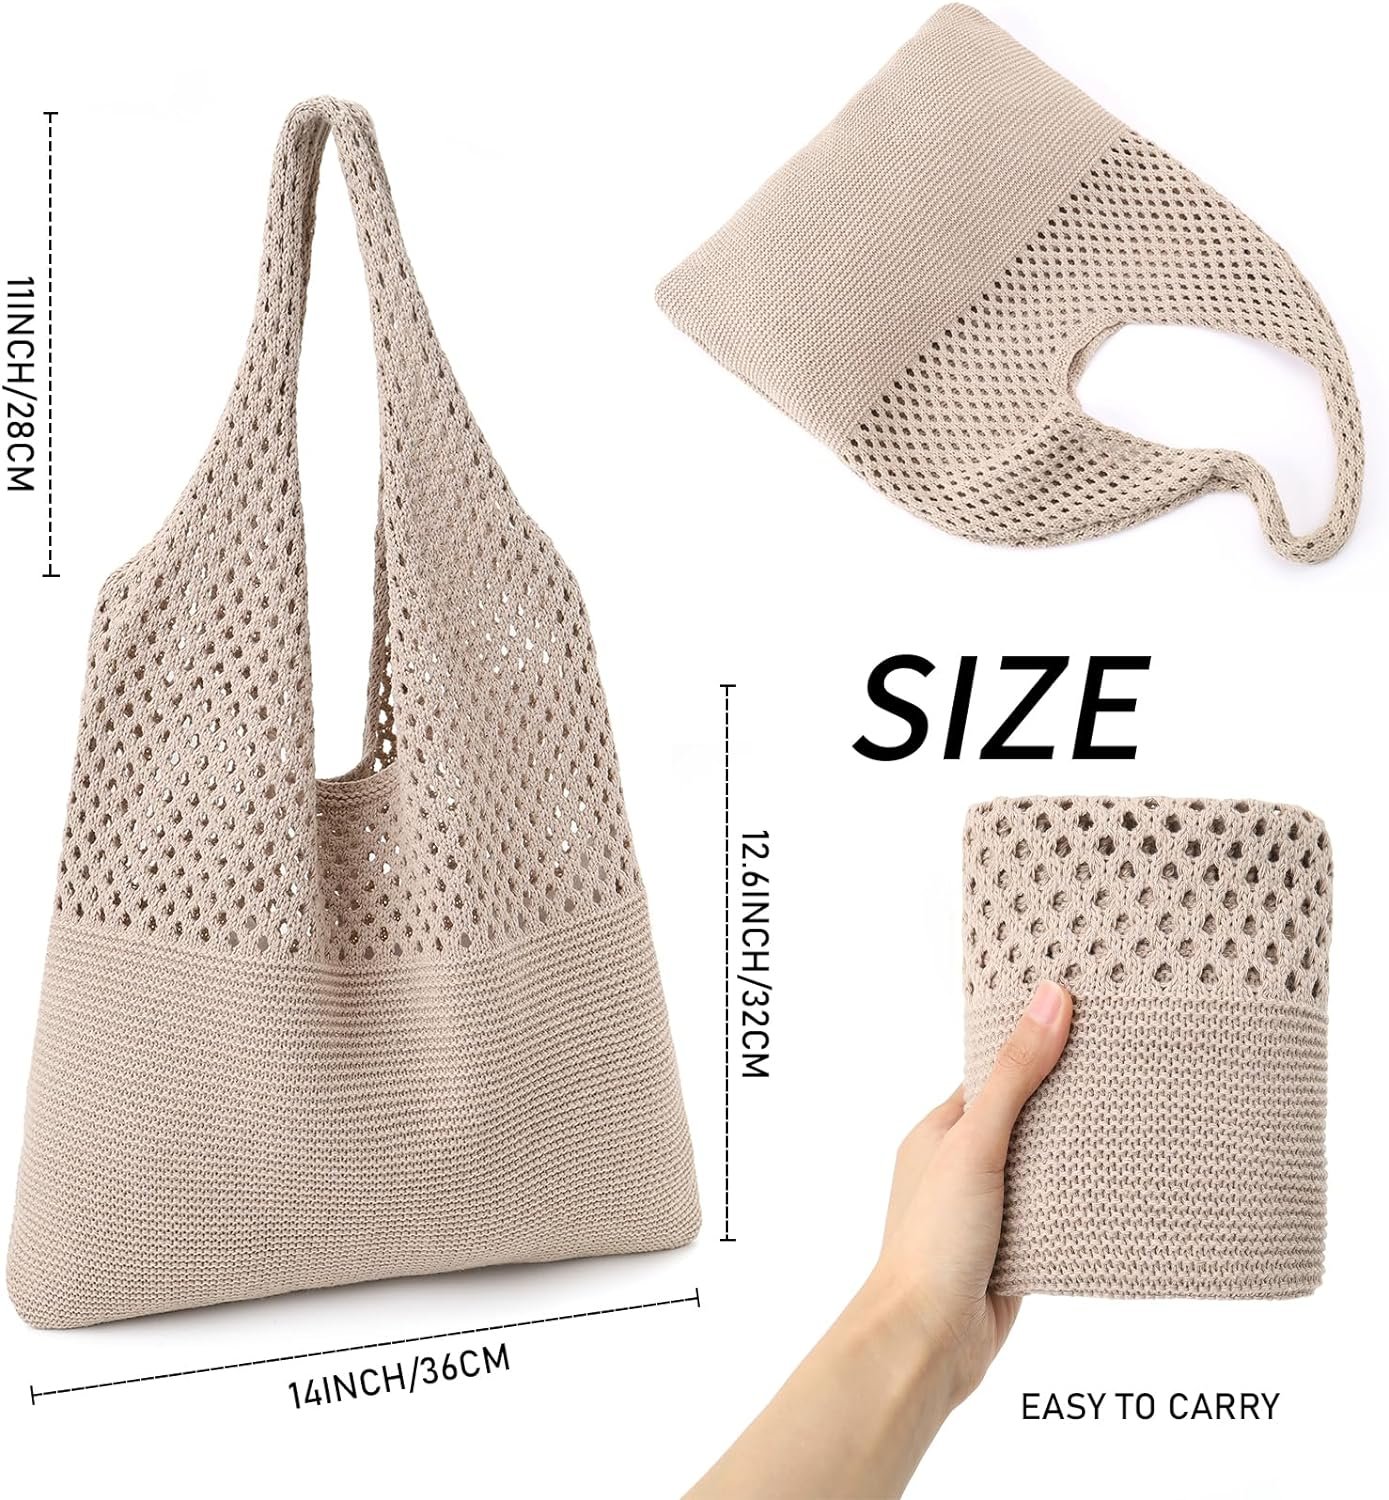 Gaudiwel Knitted Shoulder Tote Bag Large Crochet Beach Bag Hobo Bag Aesthetic Tote Handbags for Women